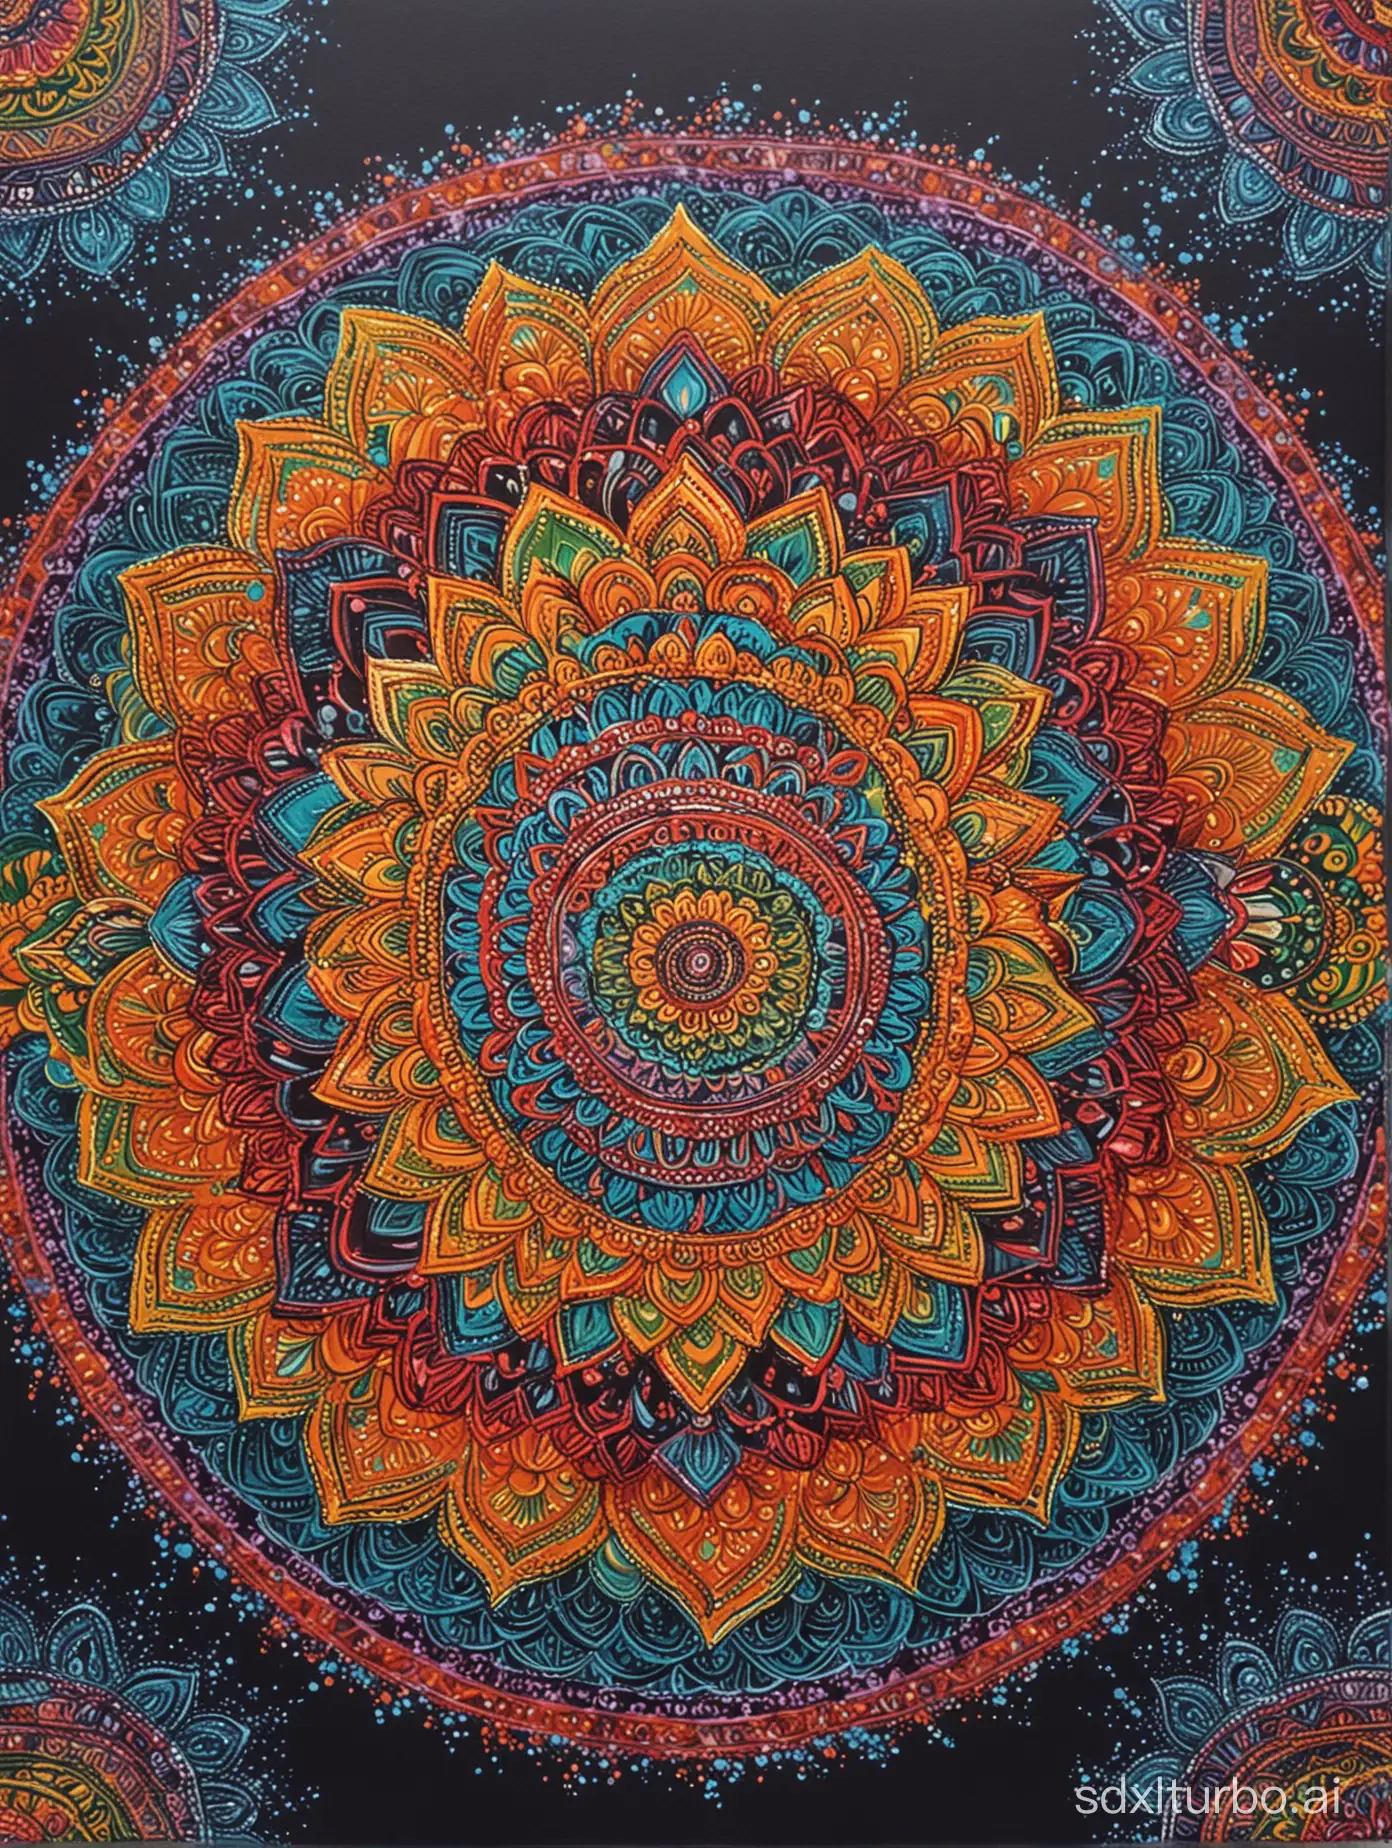 Vibrant-Handdrawn-Mandala-with-Geometric-Patterns